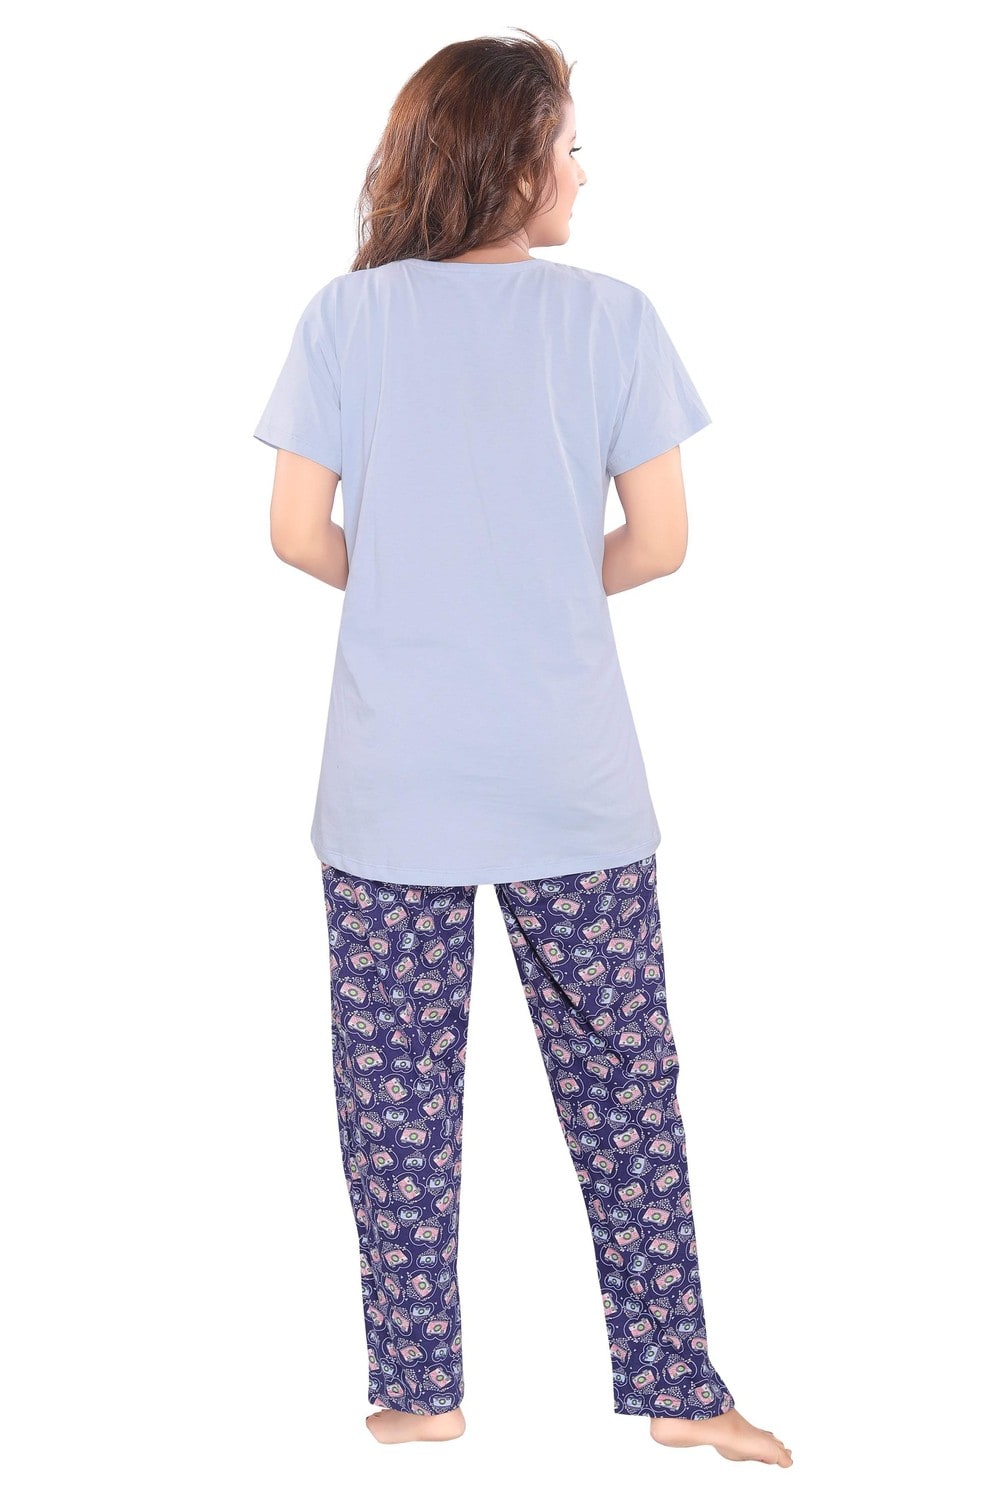 Pierre Donna Women's Cotton Pajama set With Pants - Women Sleepwear - Dealz Souq